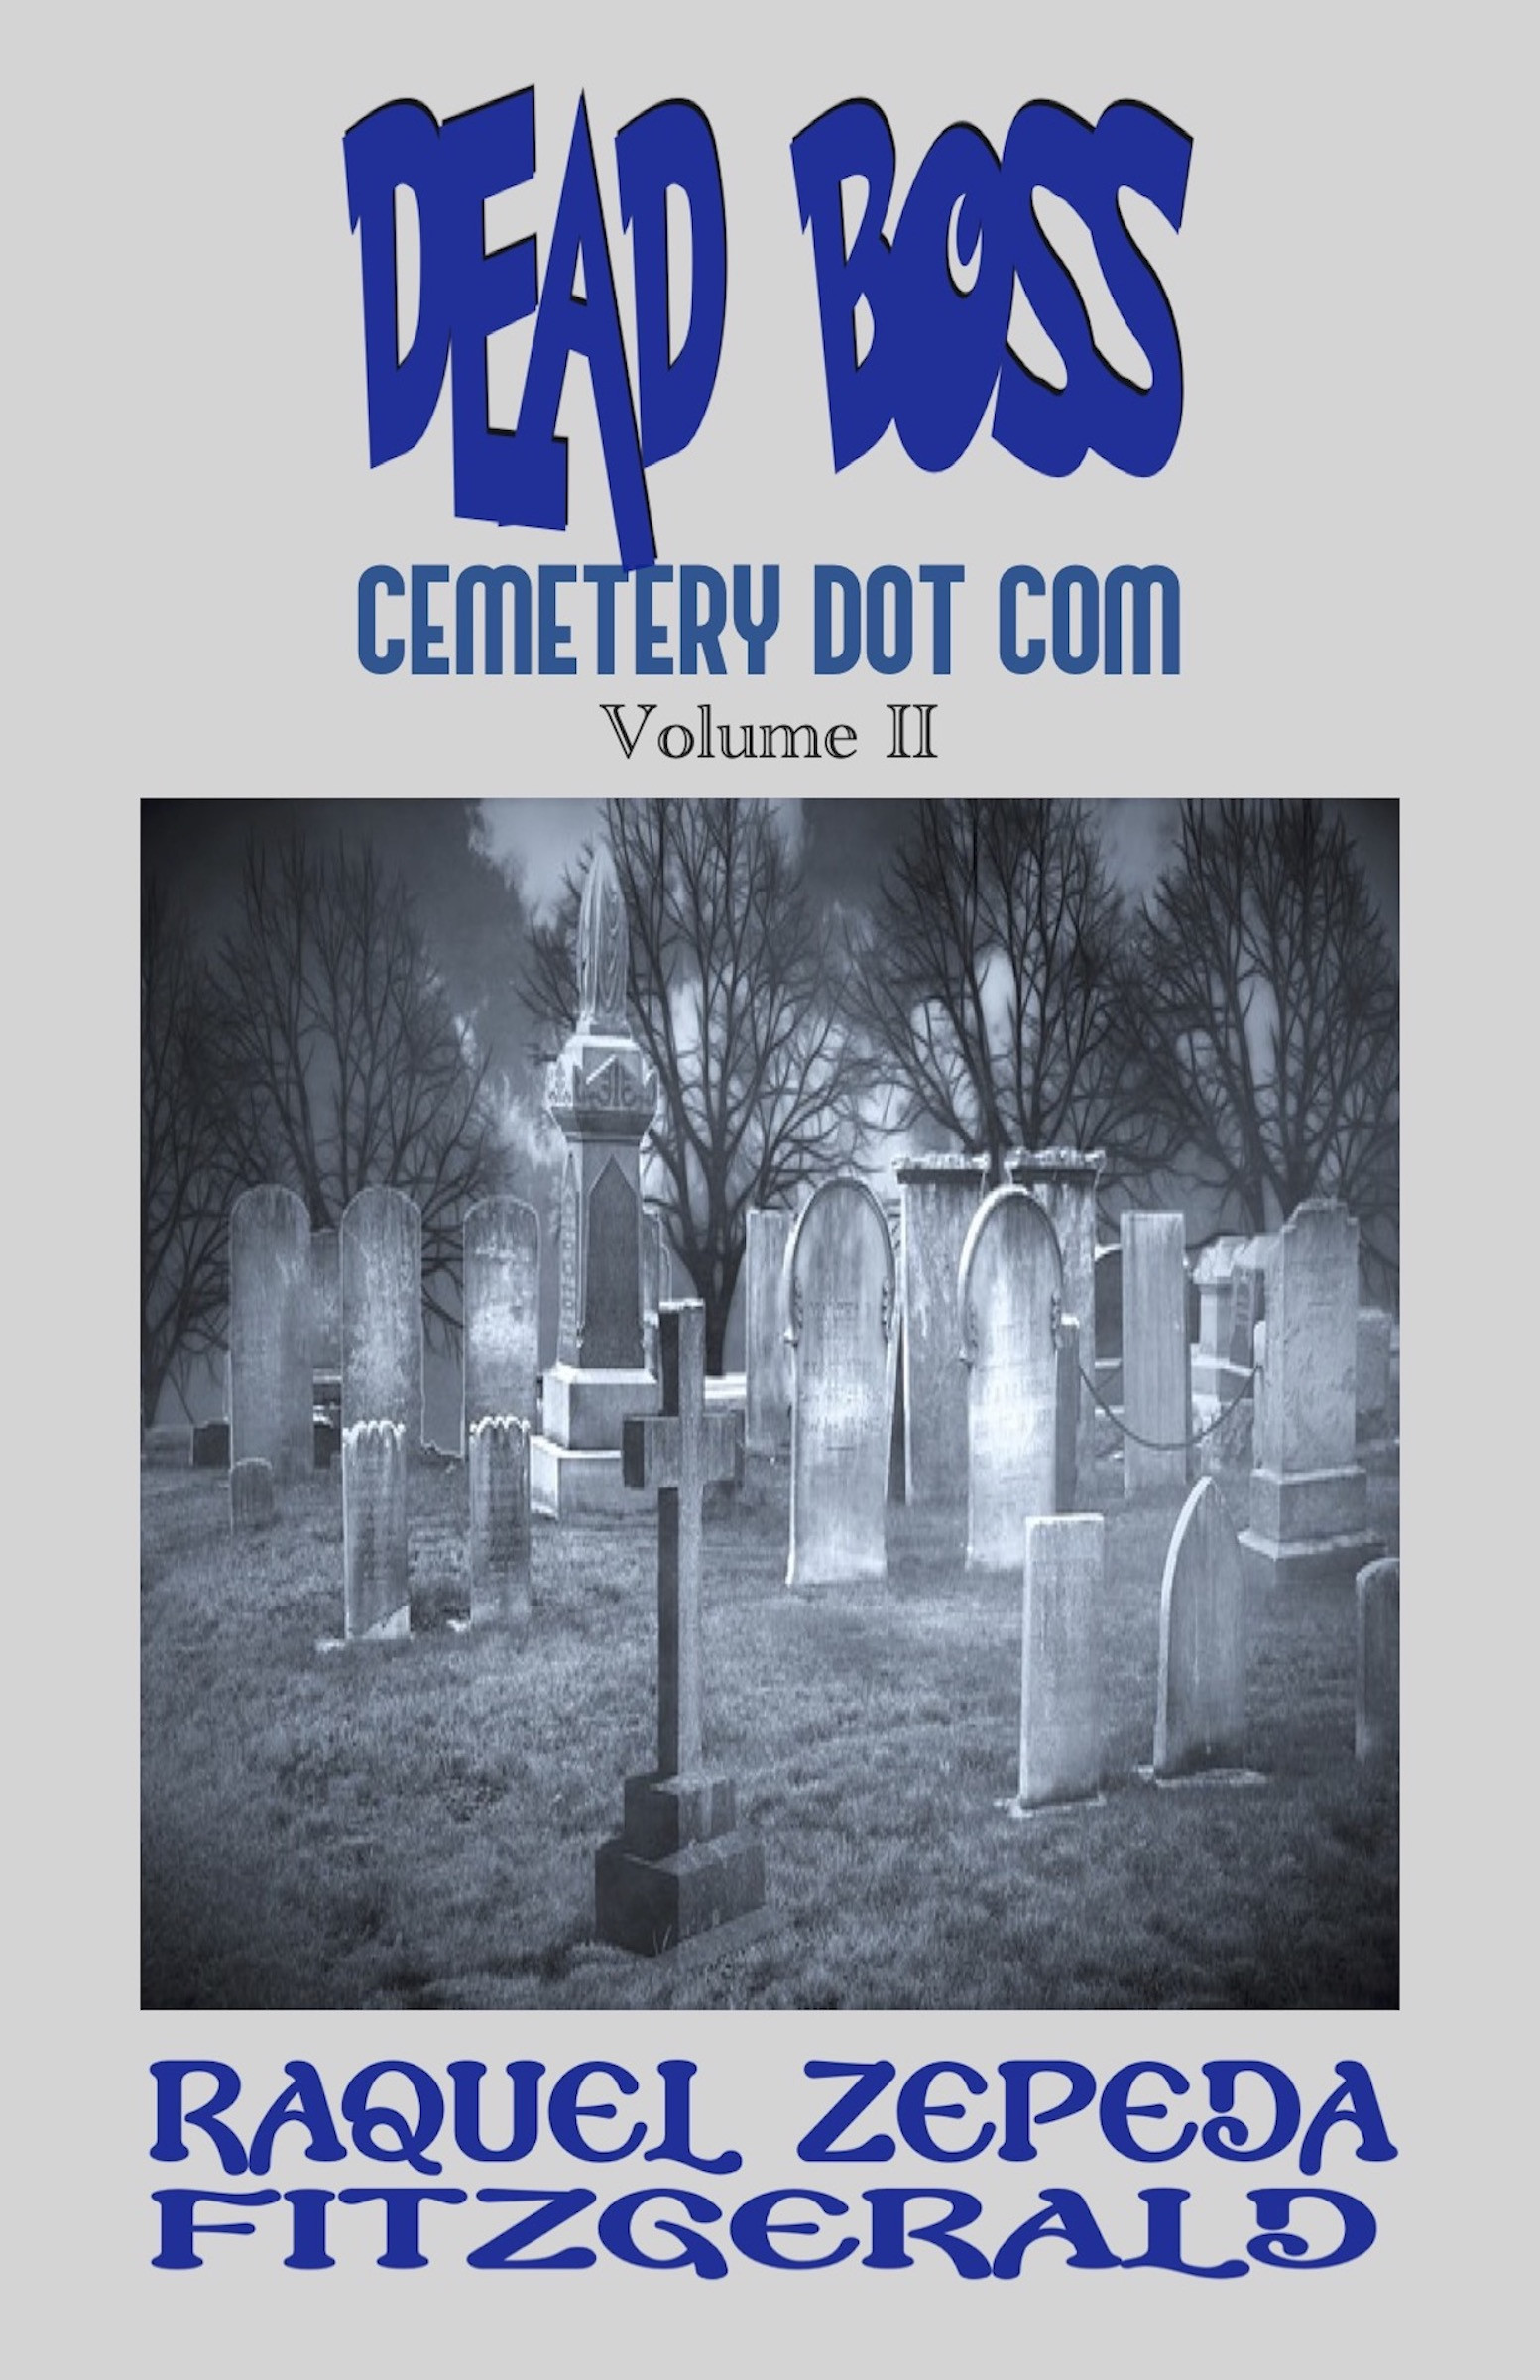 DEAD BOSS CEMETERY DOT COM, VOLUME II